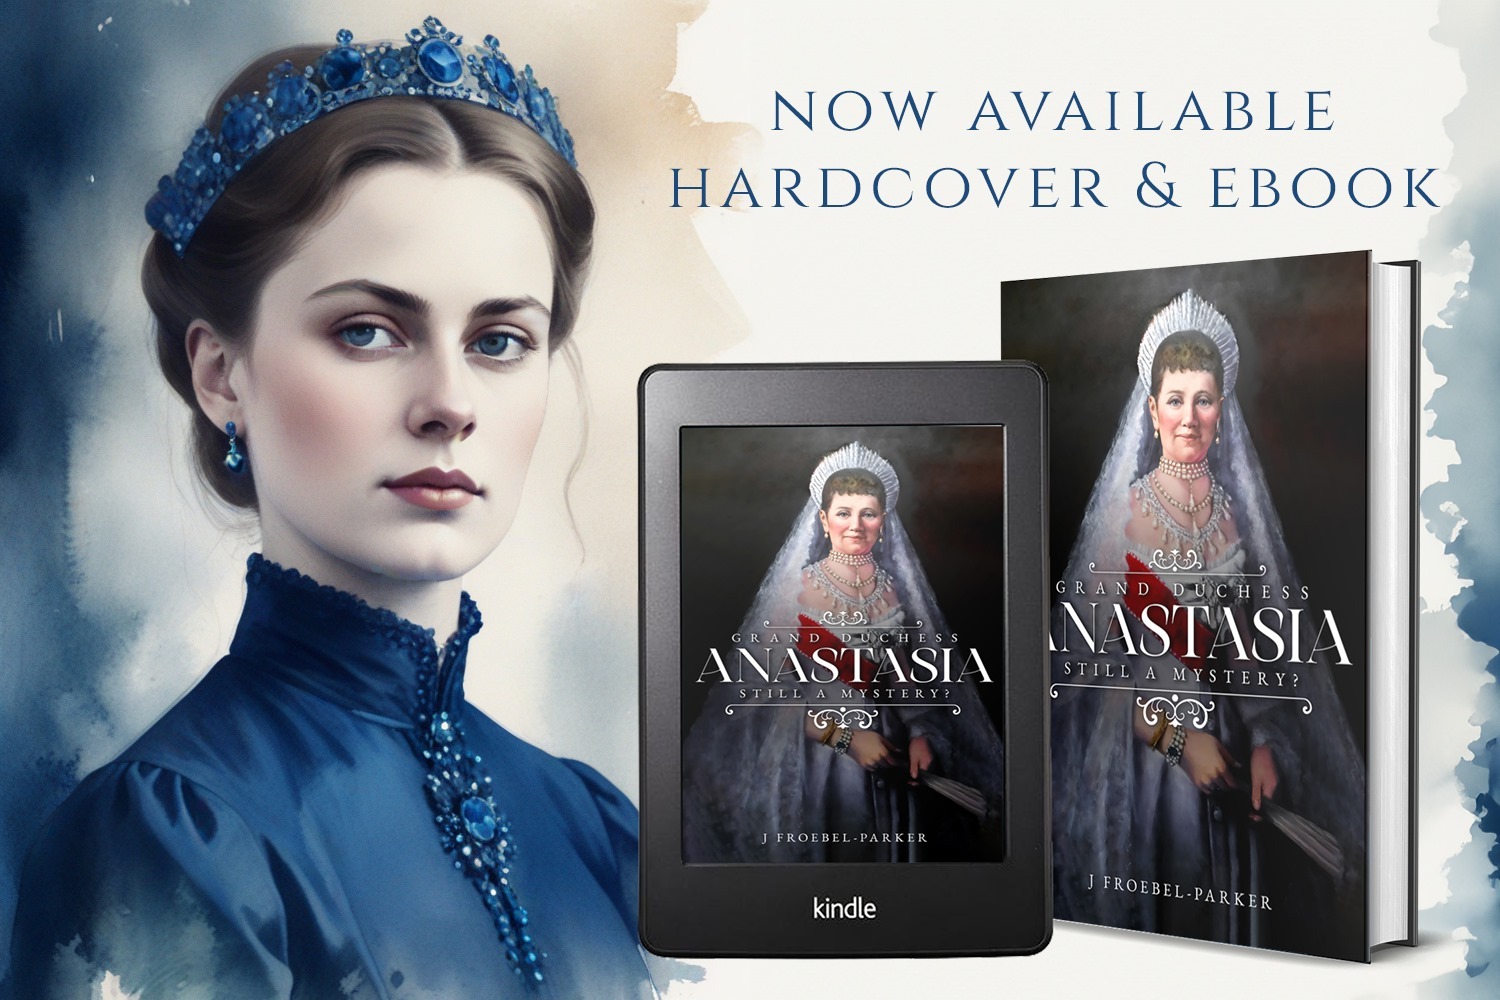 Grand Duchess Anastasia: Still a Mystery? by J Froebel-Parker